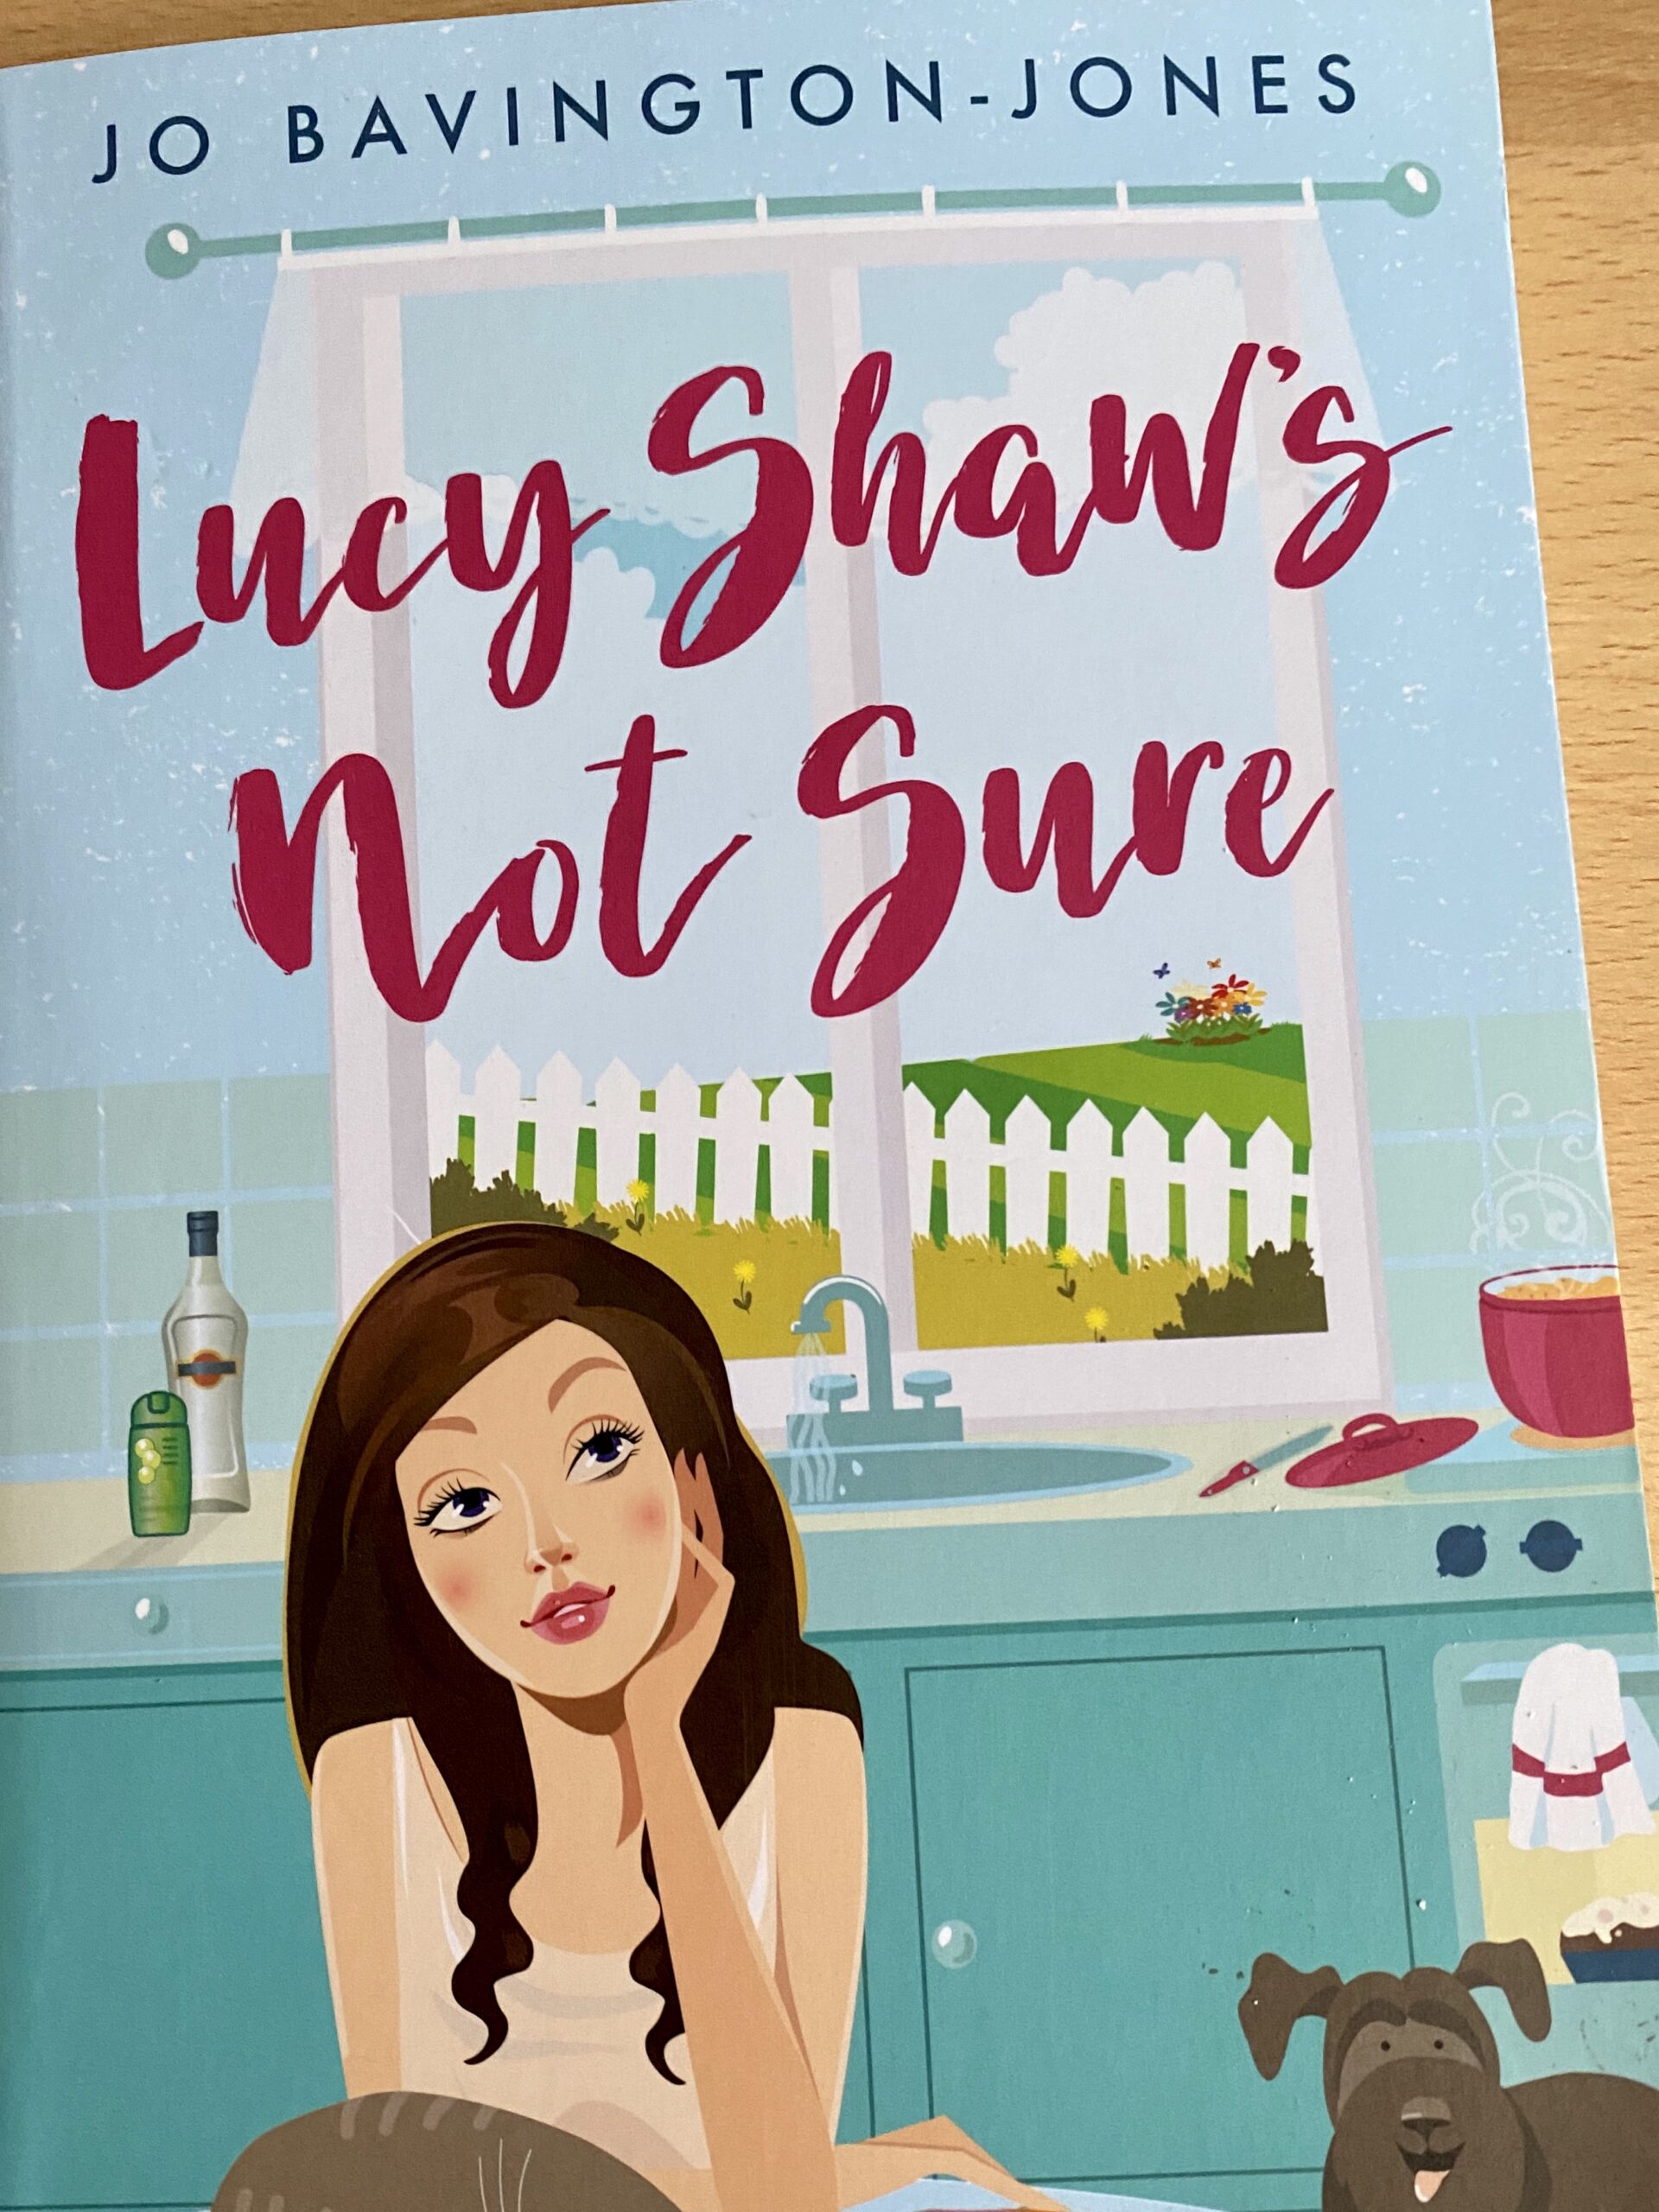 LUCY SHAW’S NOT SURE BY JO BAVINGTON-JONES – BOOK REVIEW